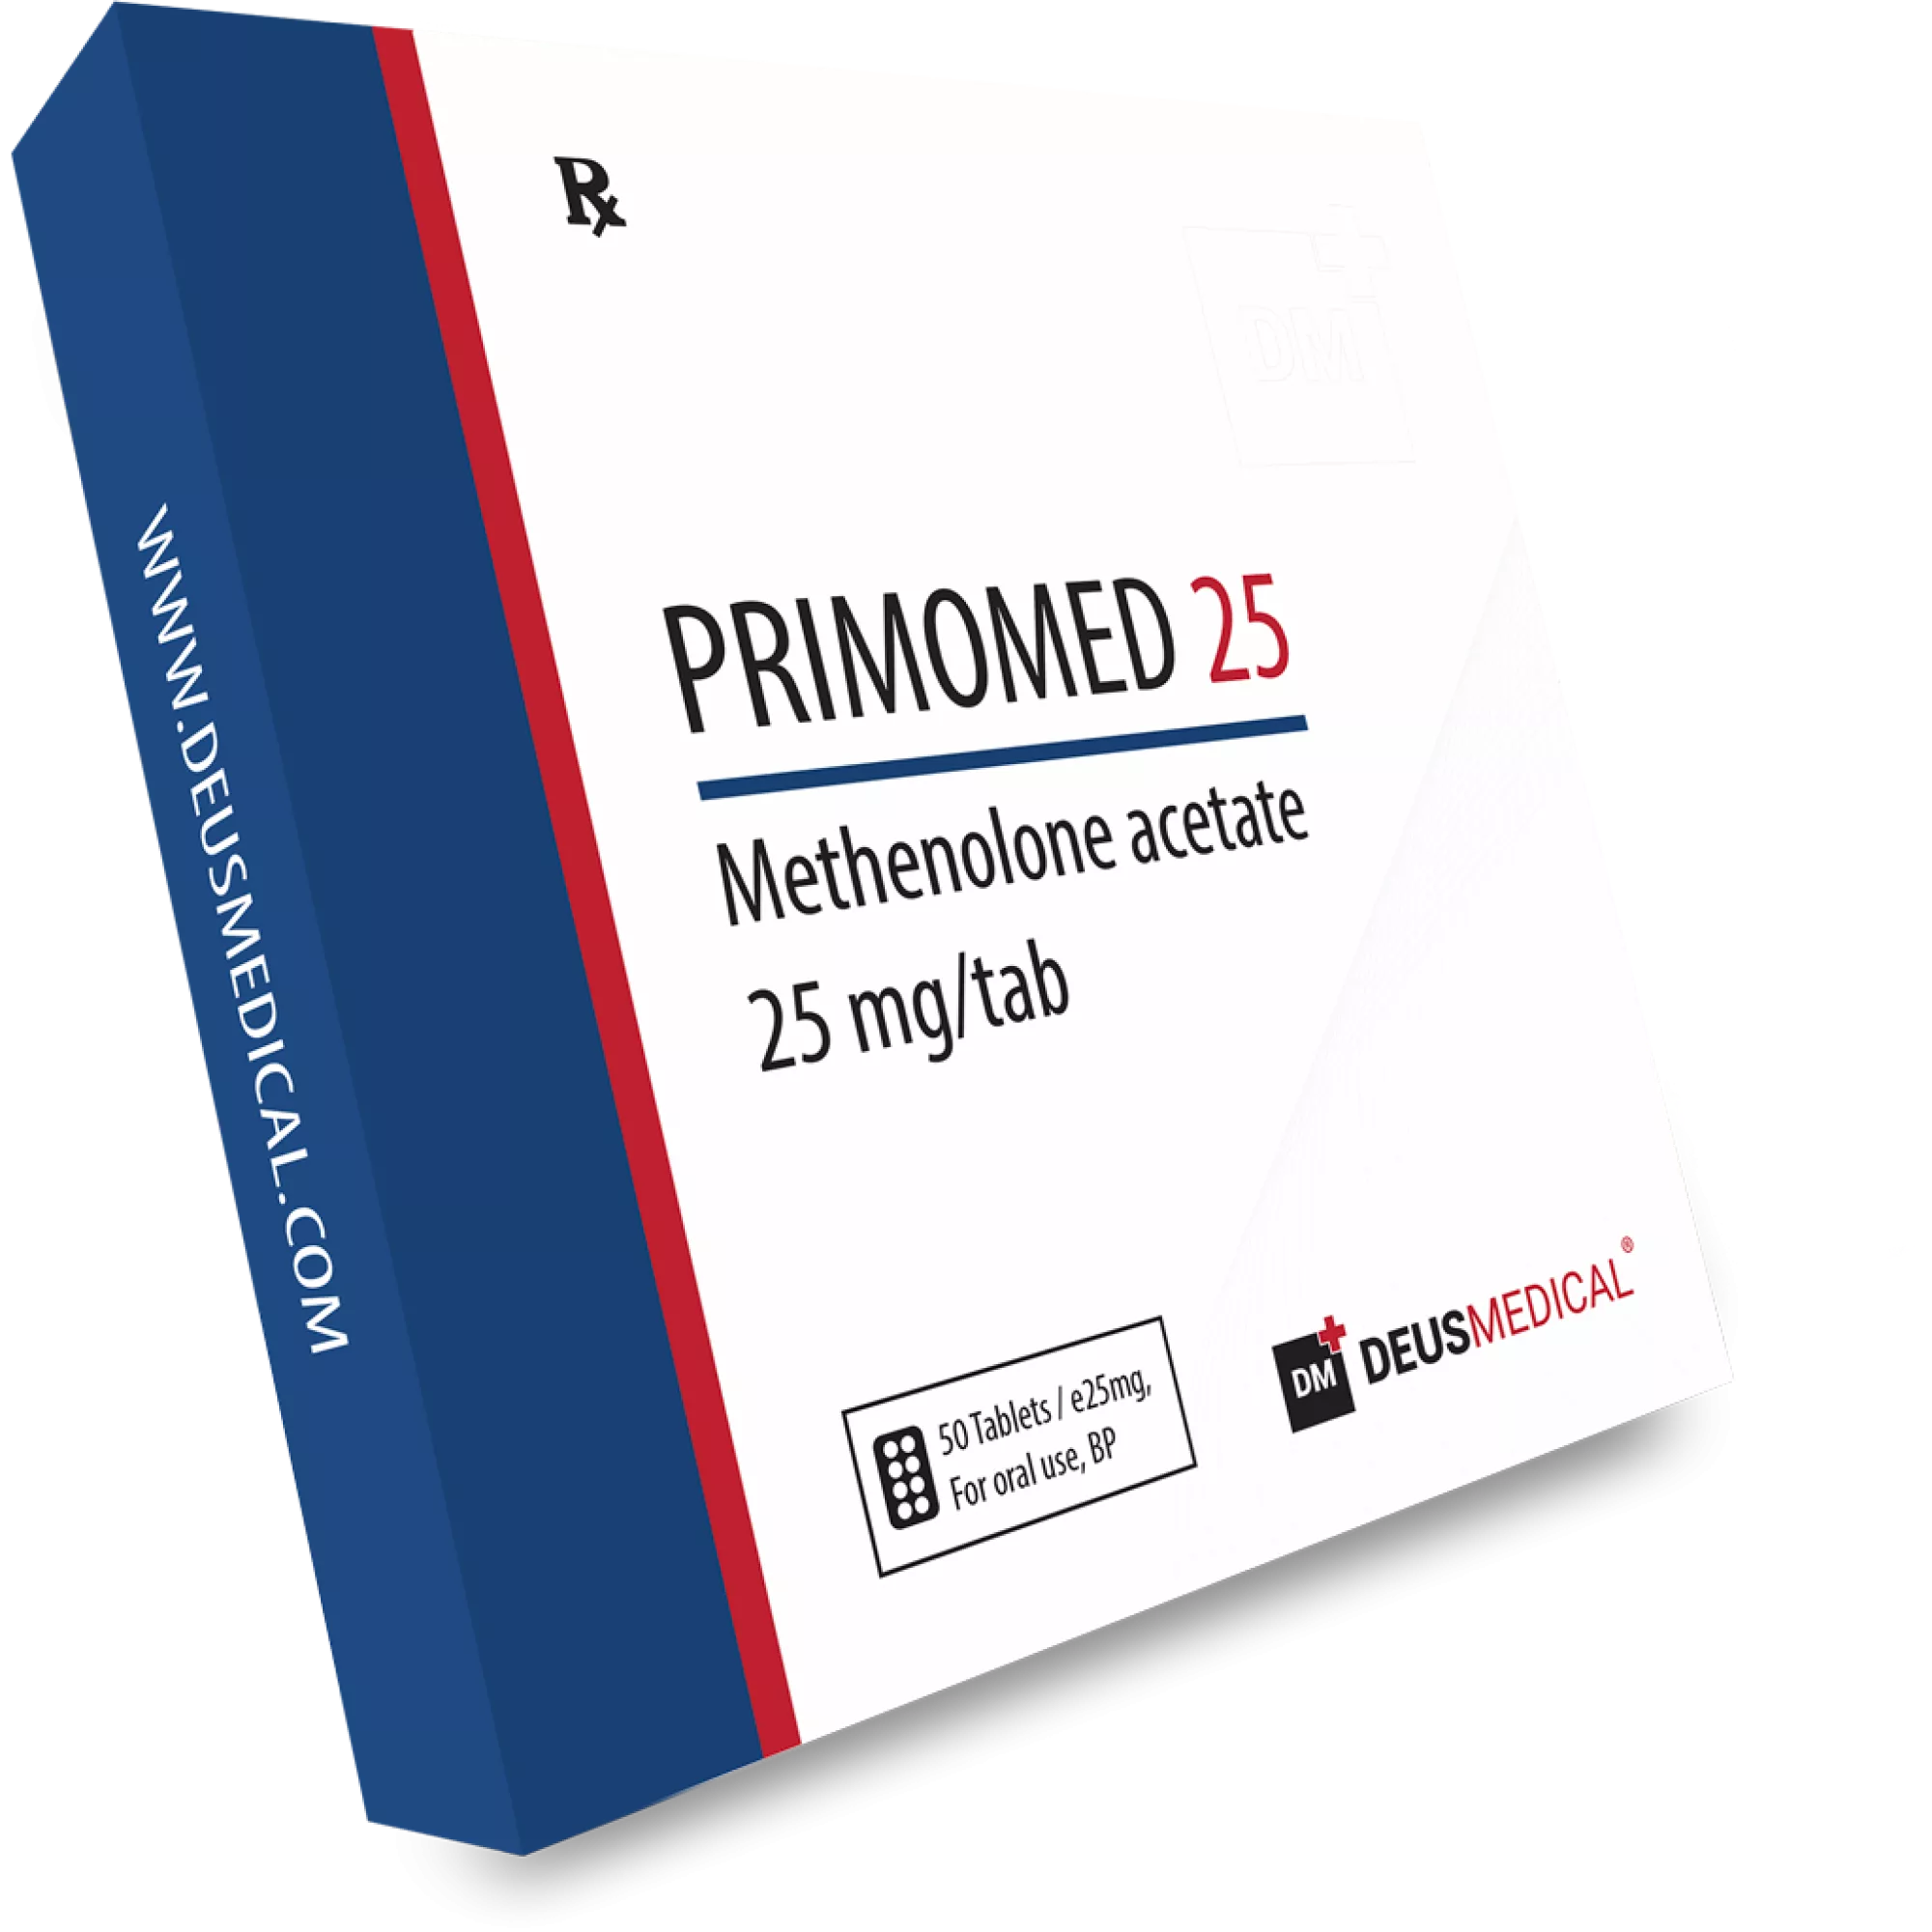 PRIMOMED 25 (metenolonacetat), Deus Medical, köp steroider online - www.deuspower.shop